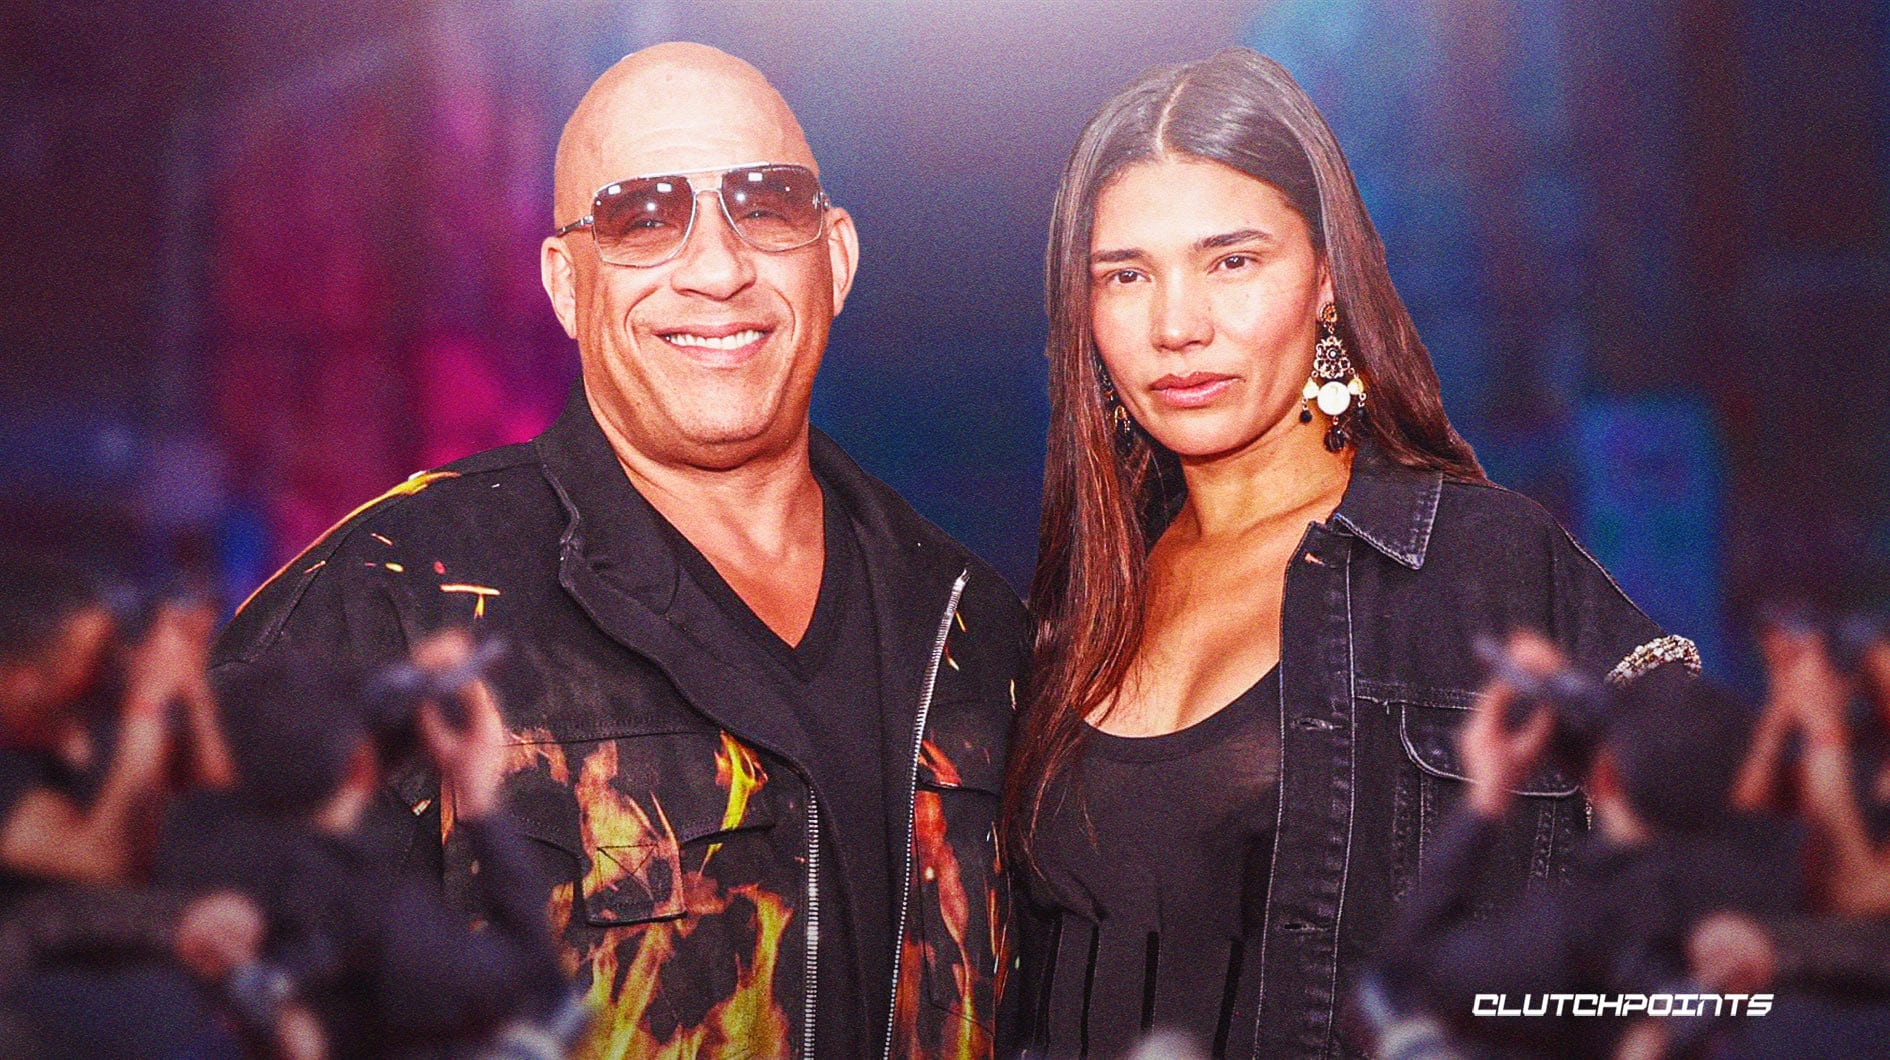 Vin Diesel's partner Paloma Jimenez